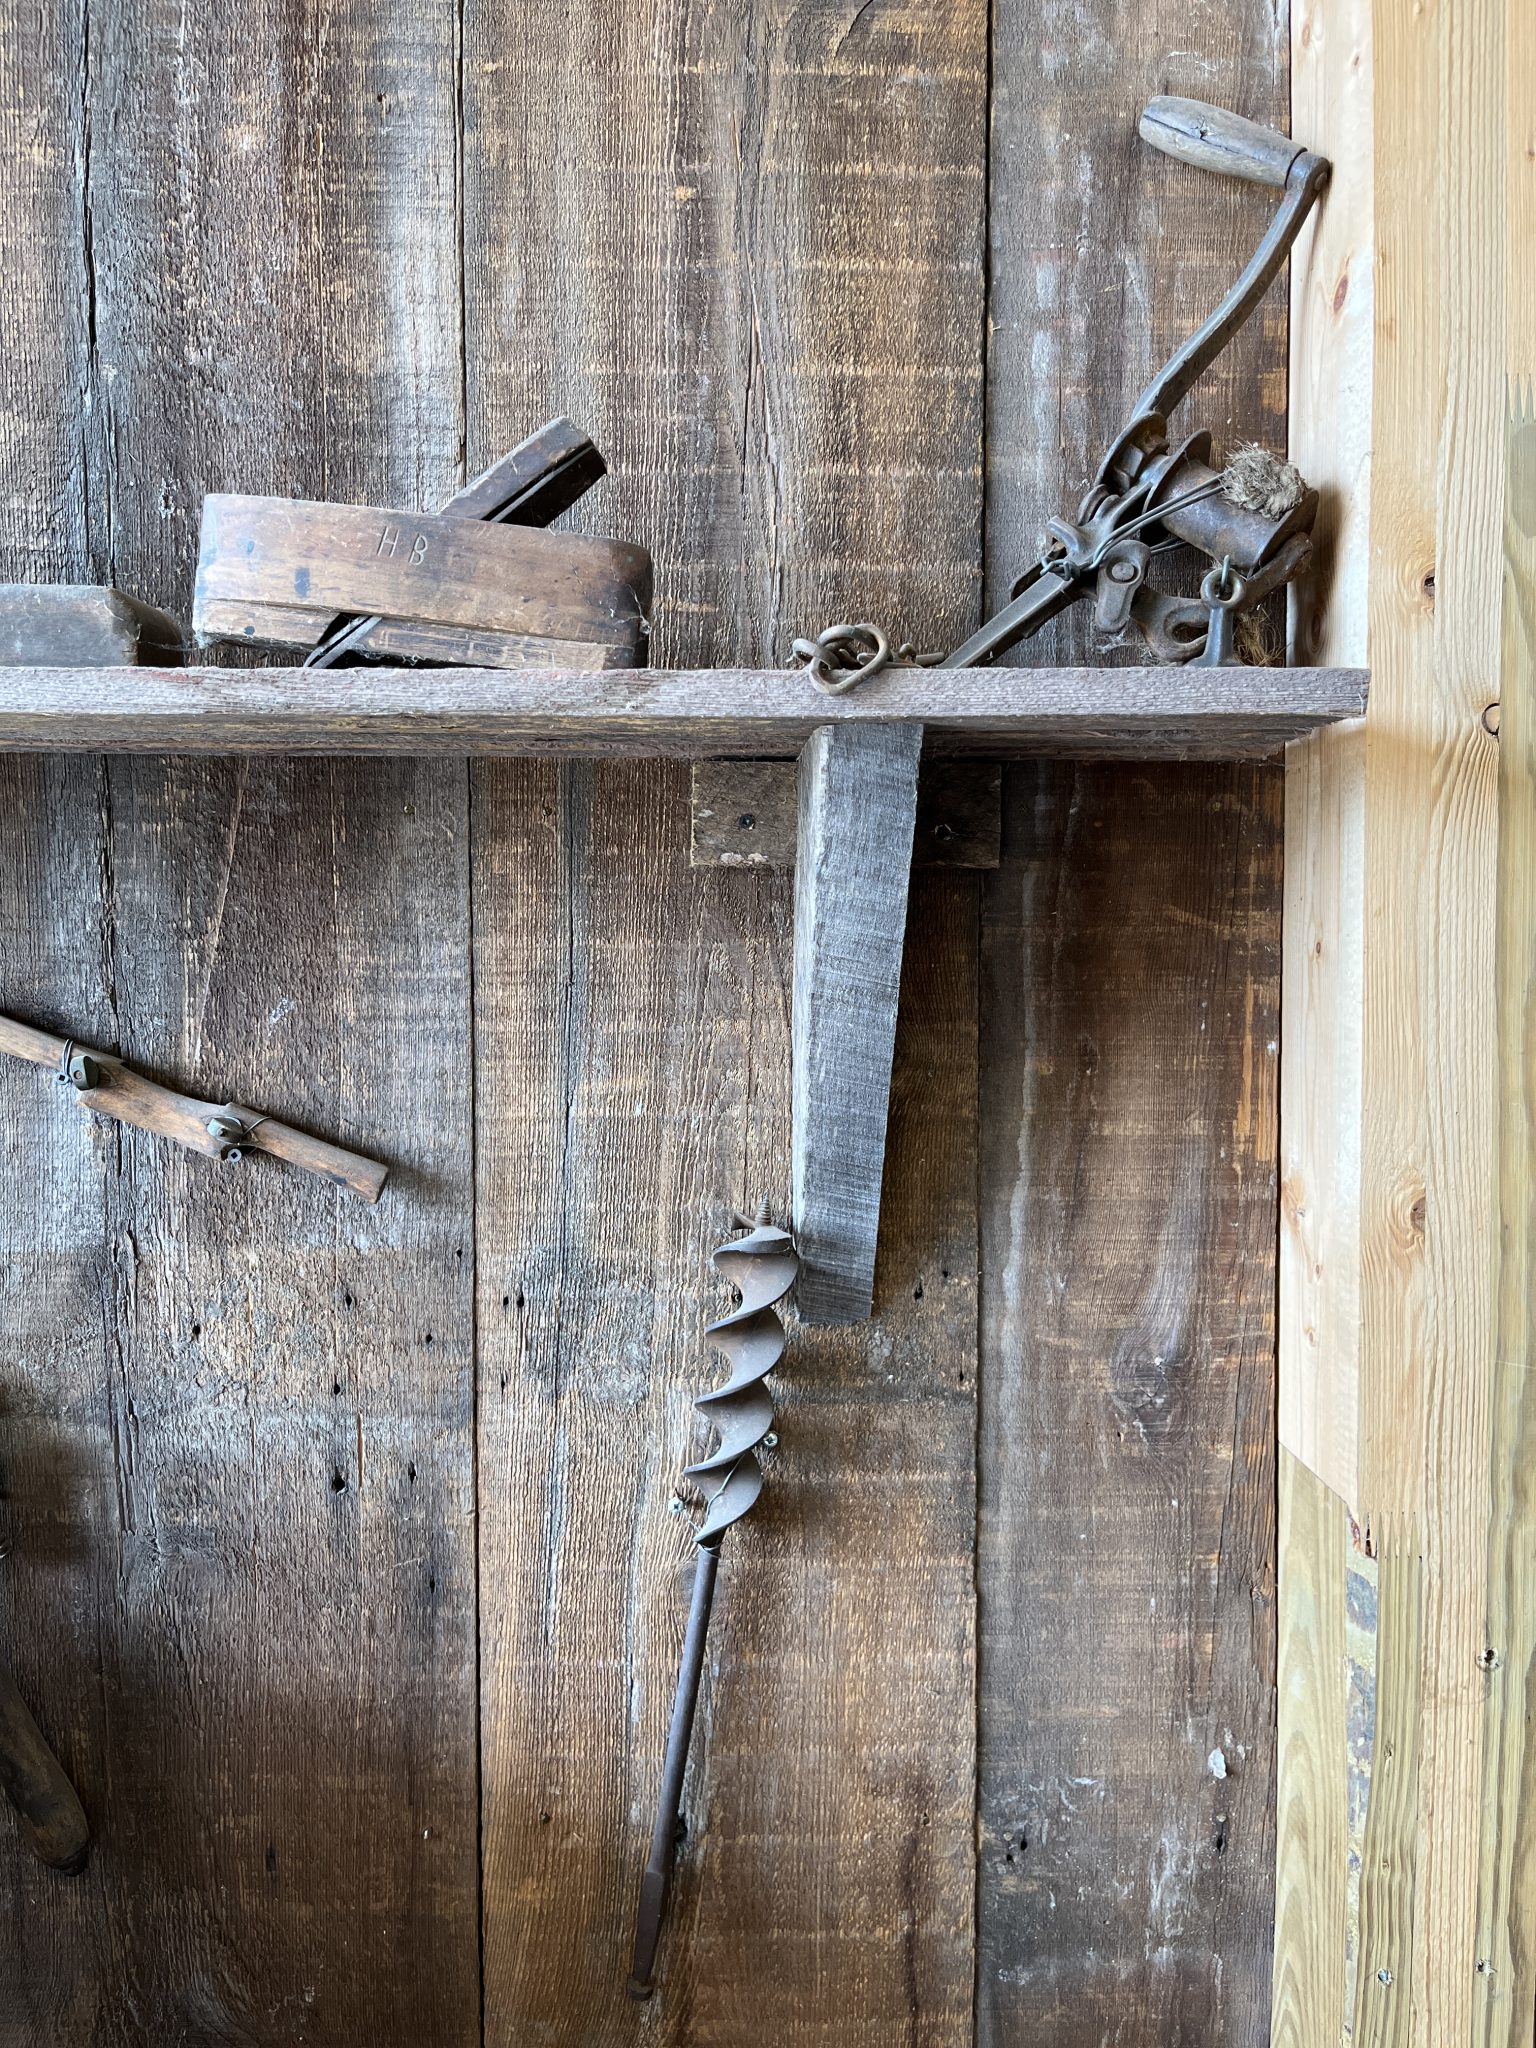 Antique tools on a shelf